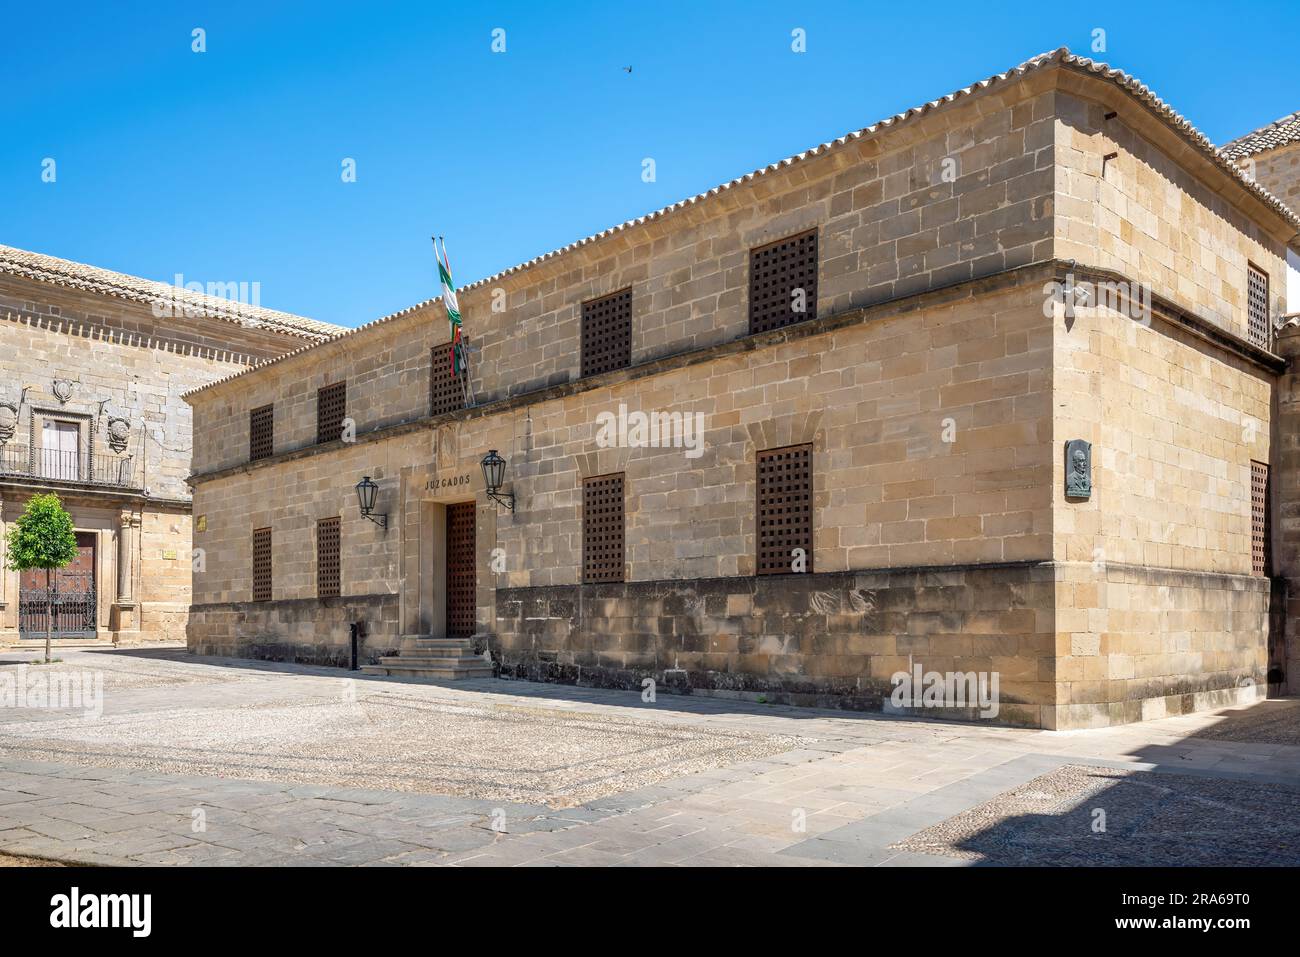 Carcel del Obispo (Bishop Jail) - Ubeda Court House at Plaza Vasquez de Molina Square - Ubeda, Jaen, Spain Stock Photo